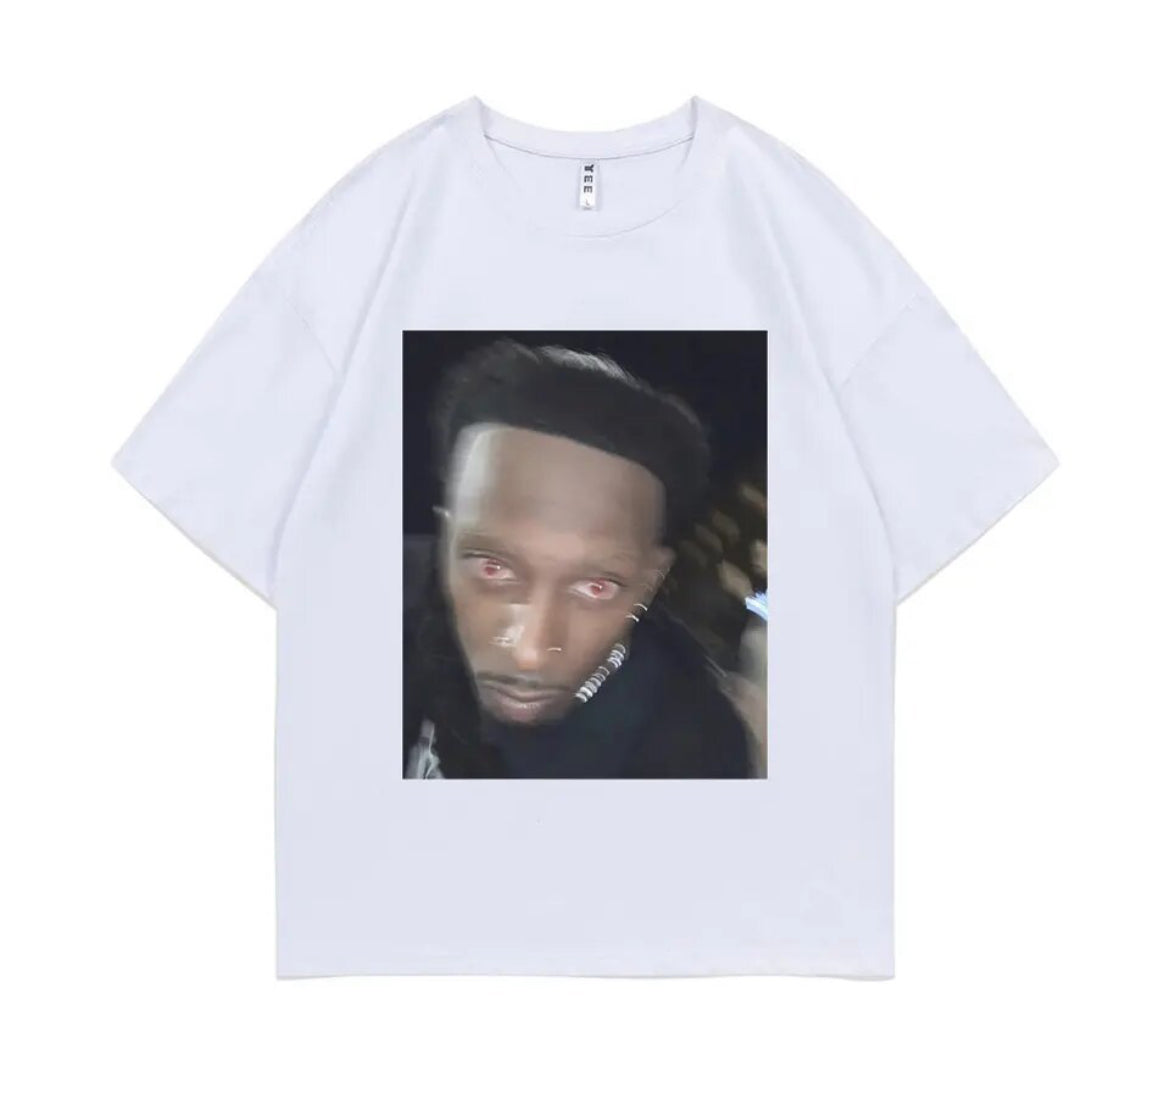 Carti Ass Face T-shirt